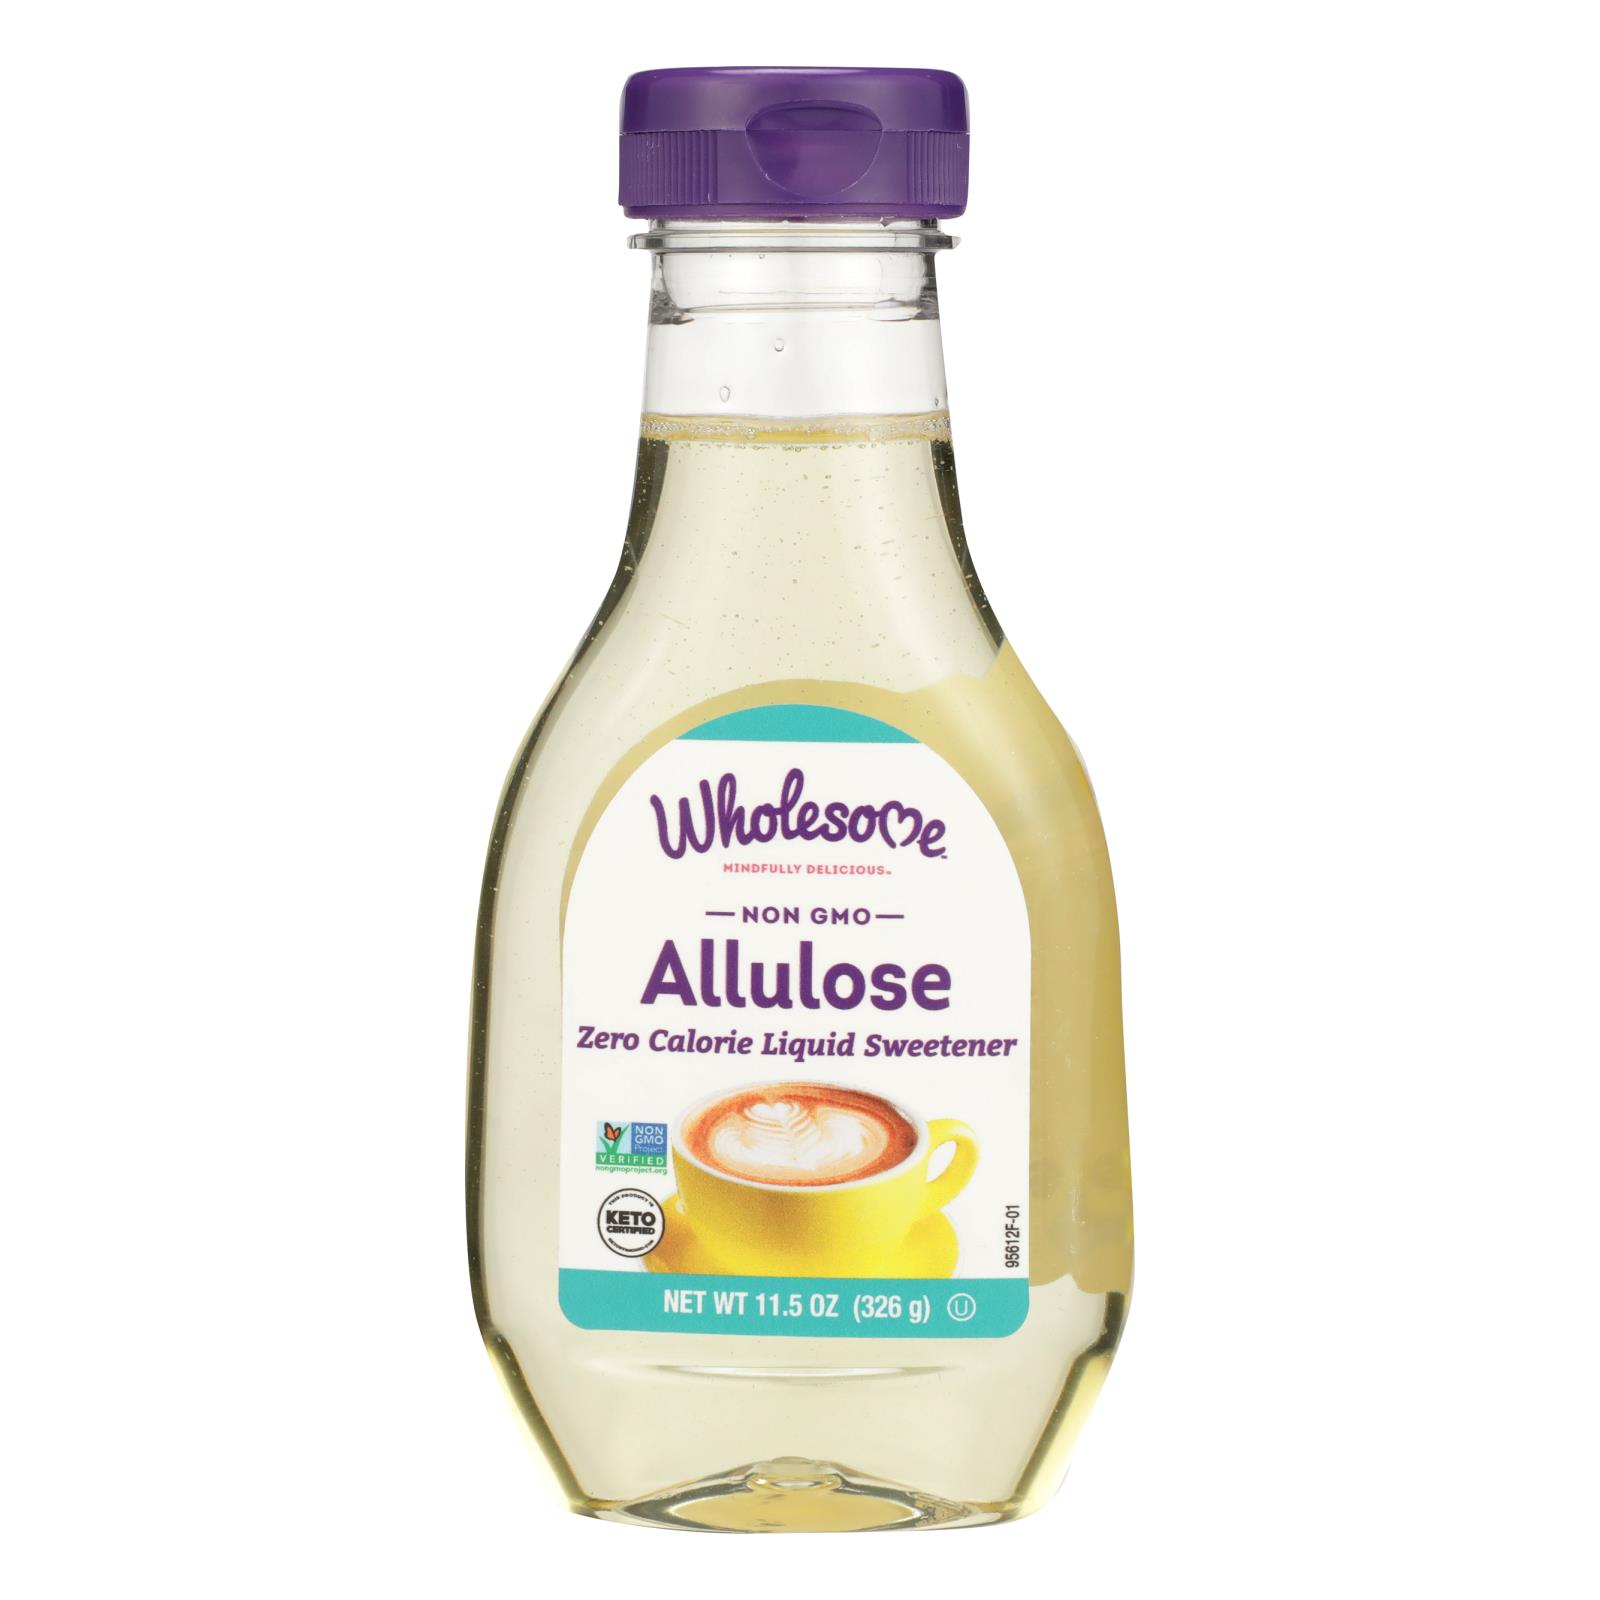 Wholesome - Allulose Sweetener Liquid - 6개 묶음상품 - 11.5 OZ